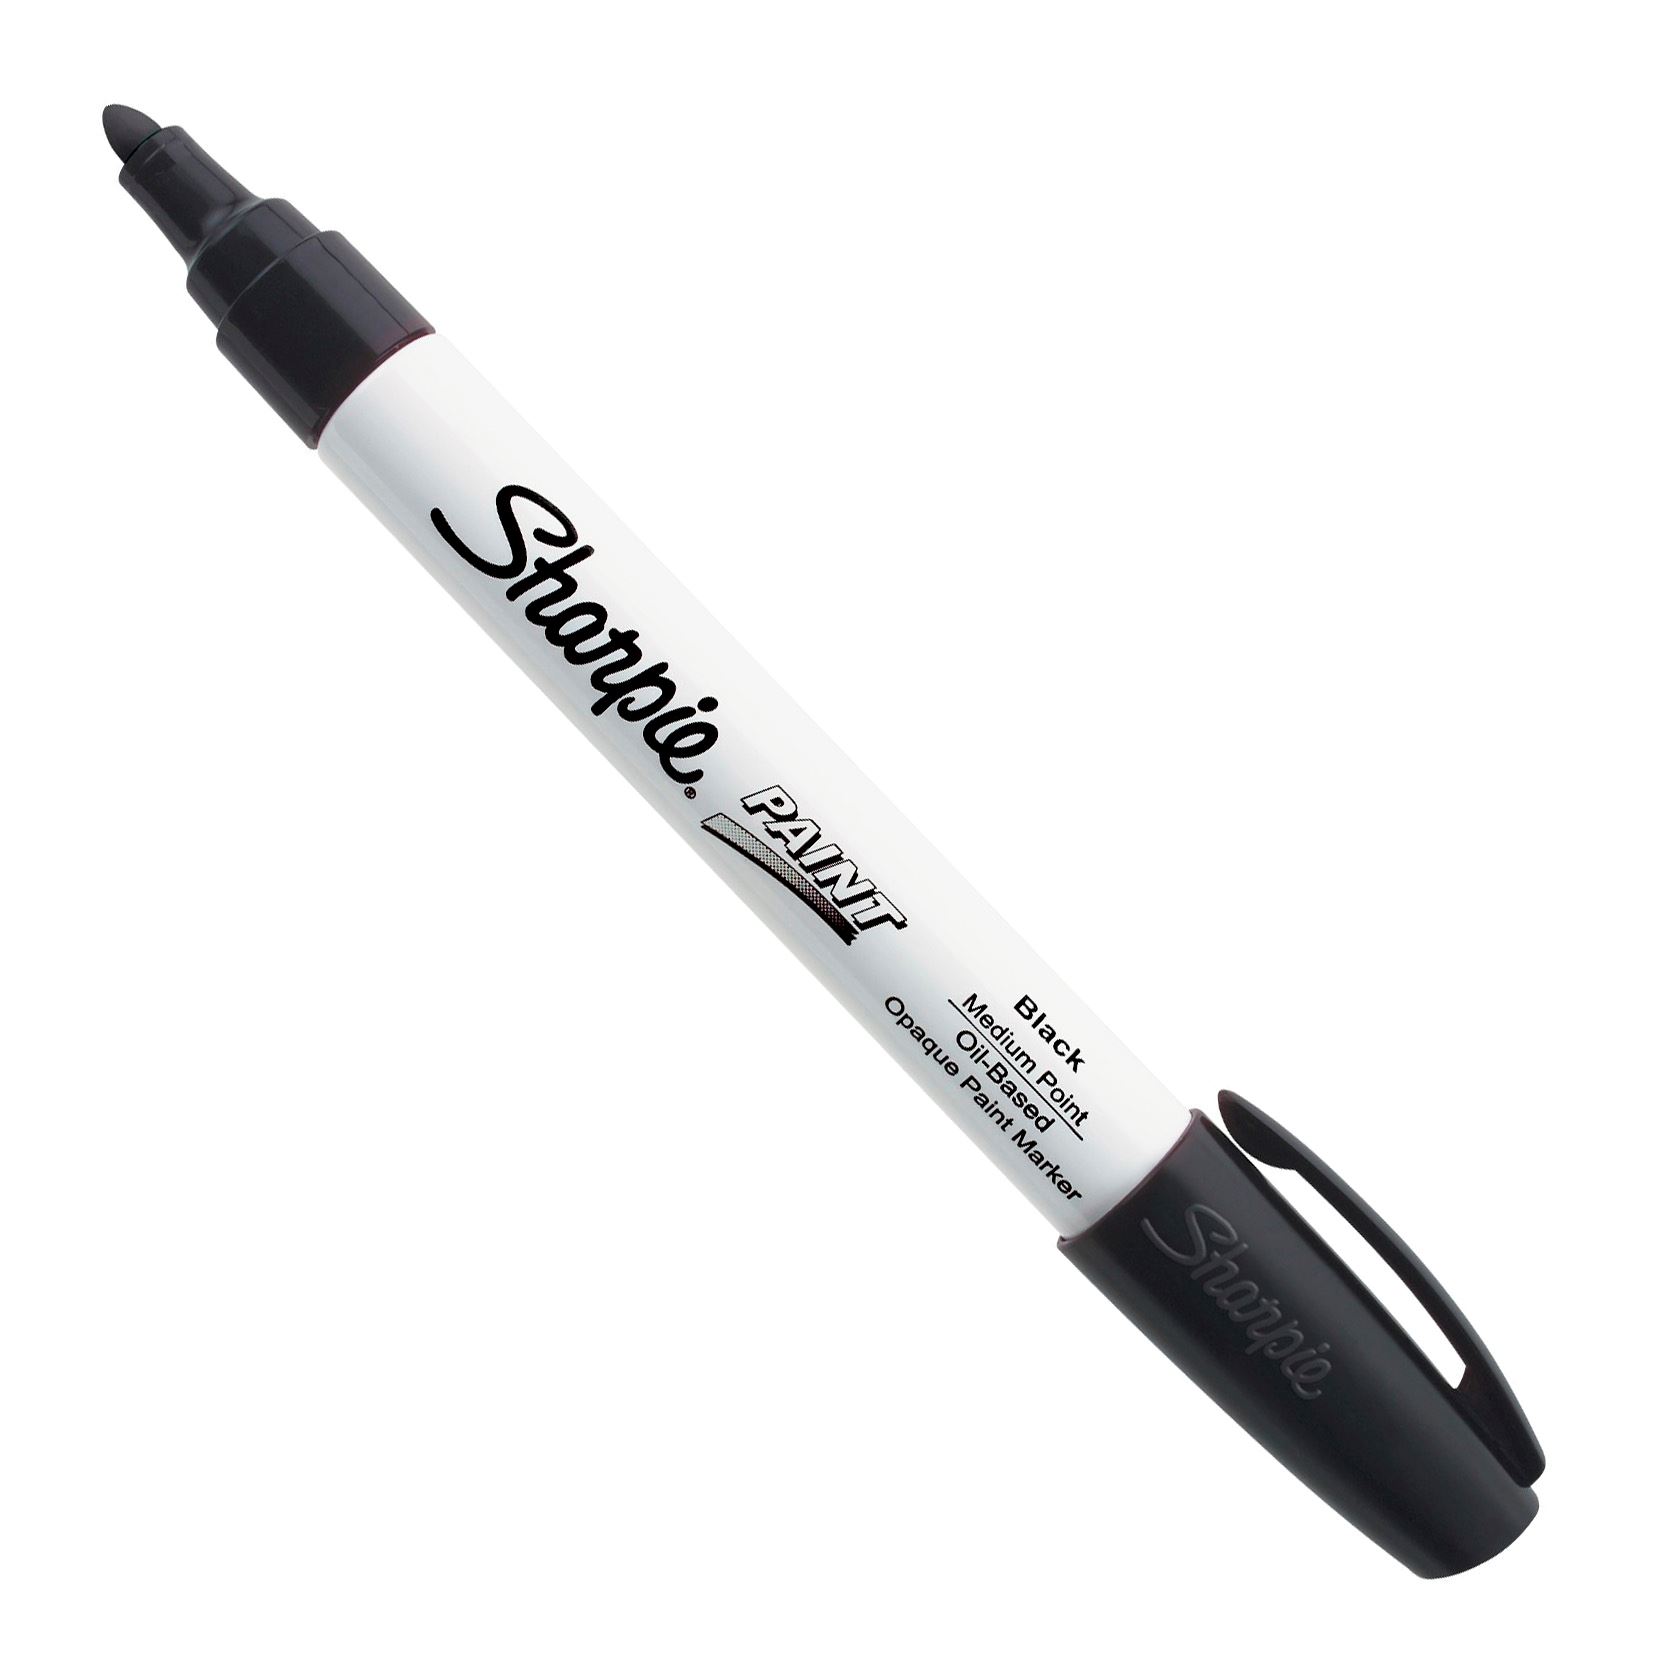 Sharpie Oil-based Paint Markers - Medium Marker Point - Black Oil